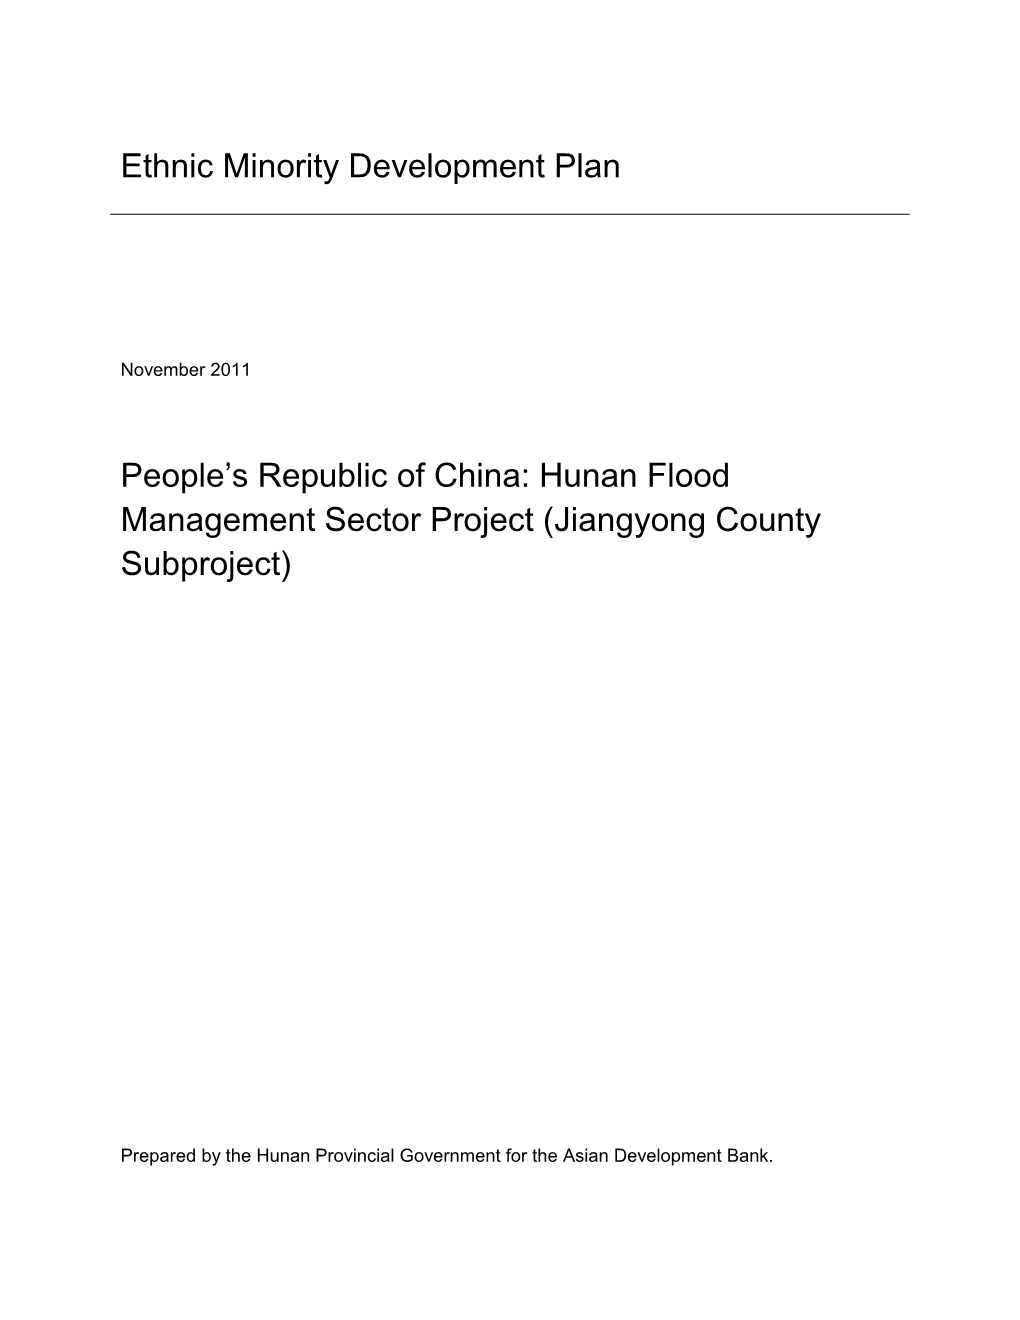 IPDP: PRC: Jiangyong County Subproject, Hunan Flood